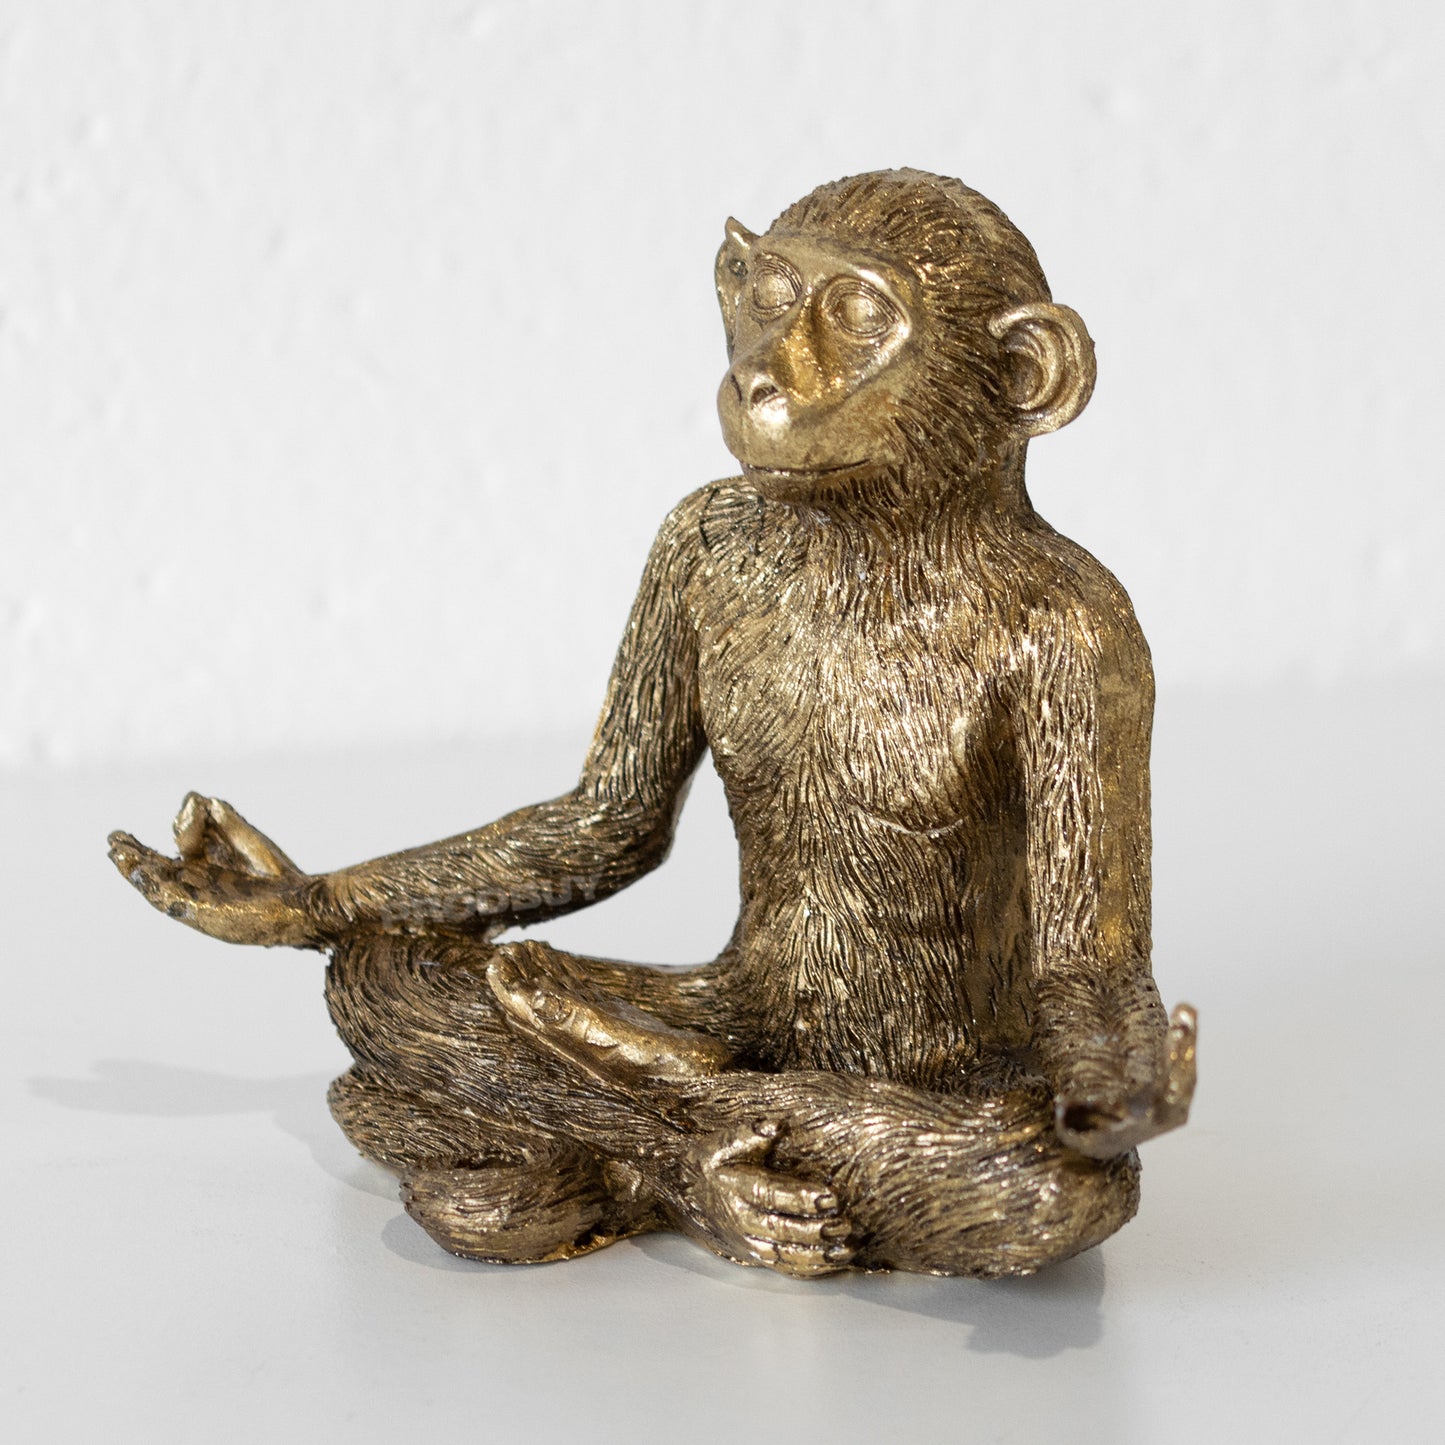 Set of 3 Yoga Pose Monkey Gold Resin Ornaments